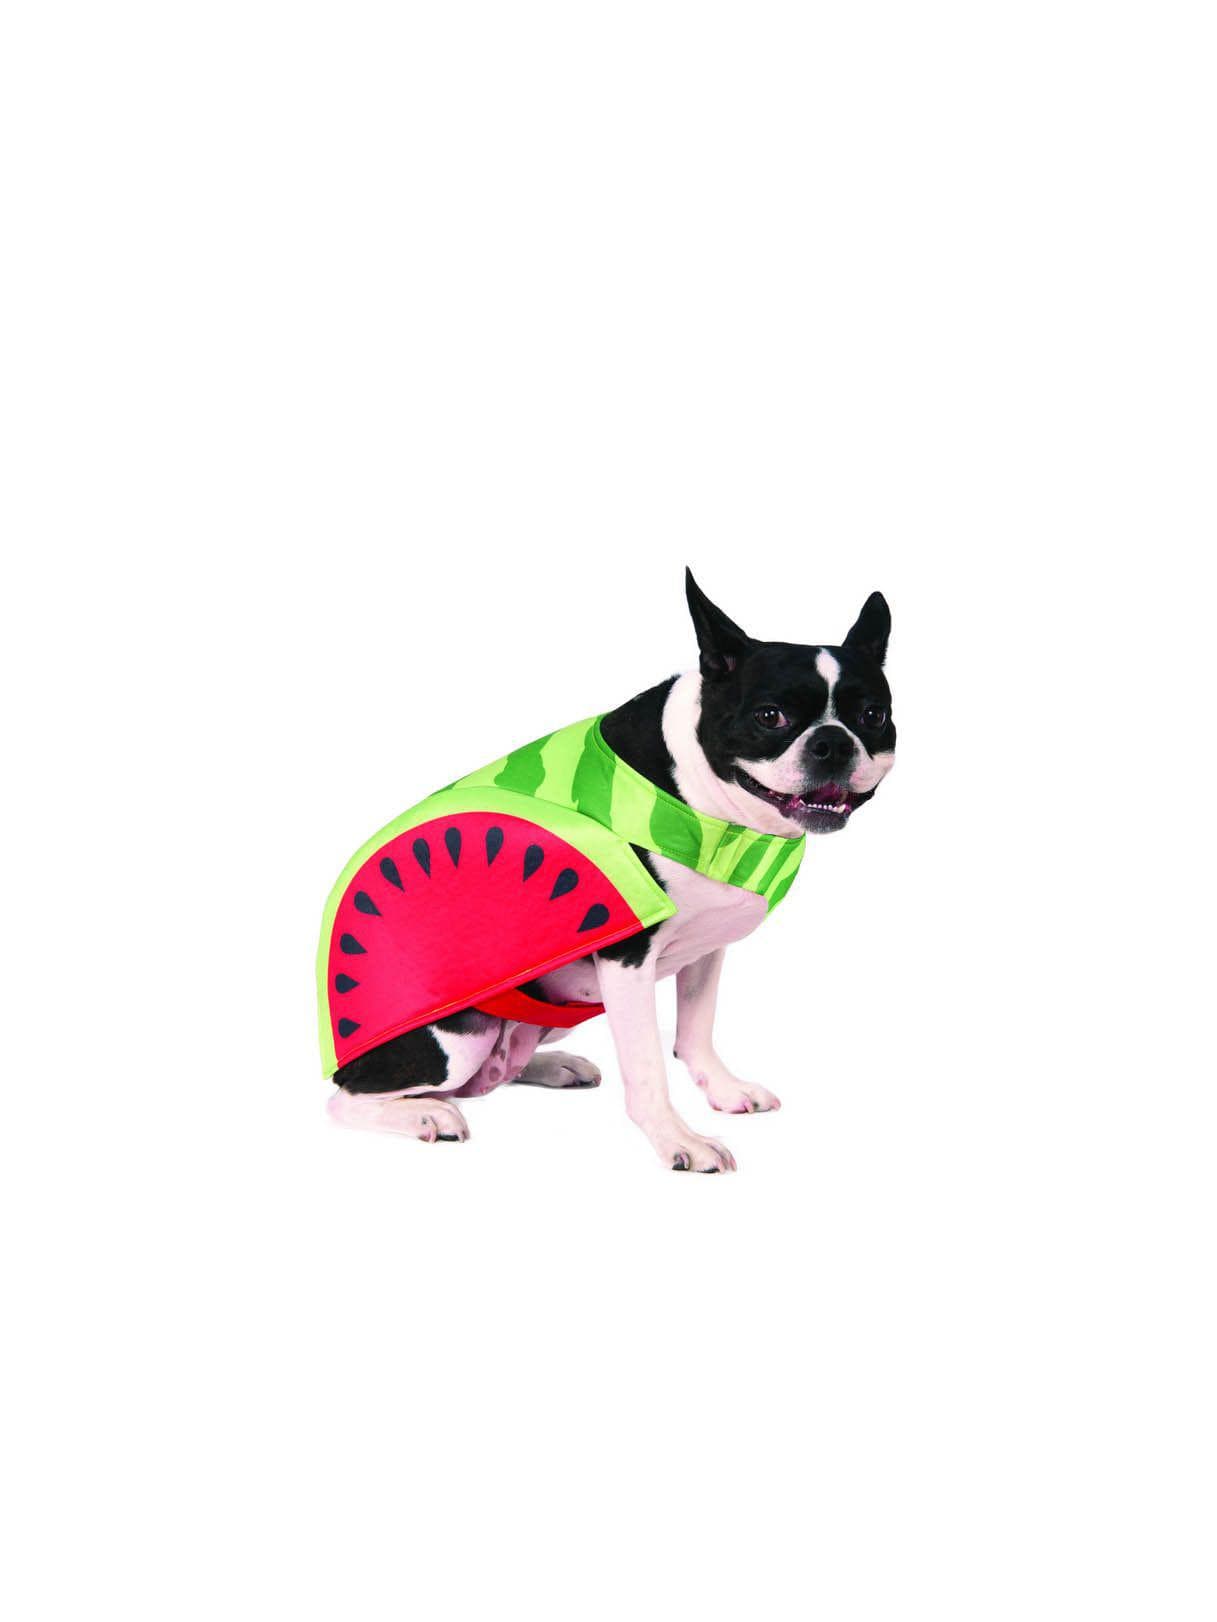 Watermelon Pet Costume - costumes.com